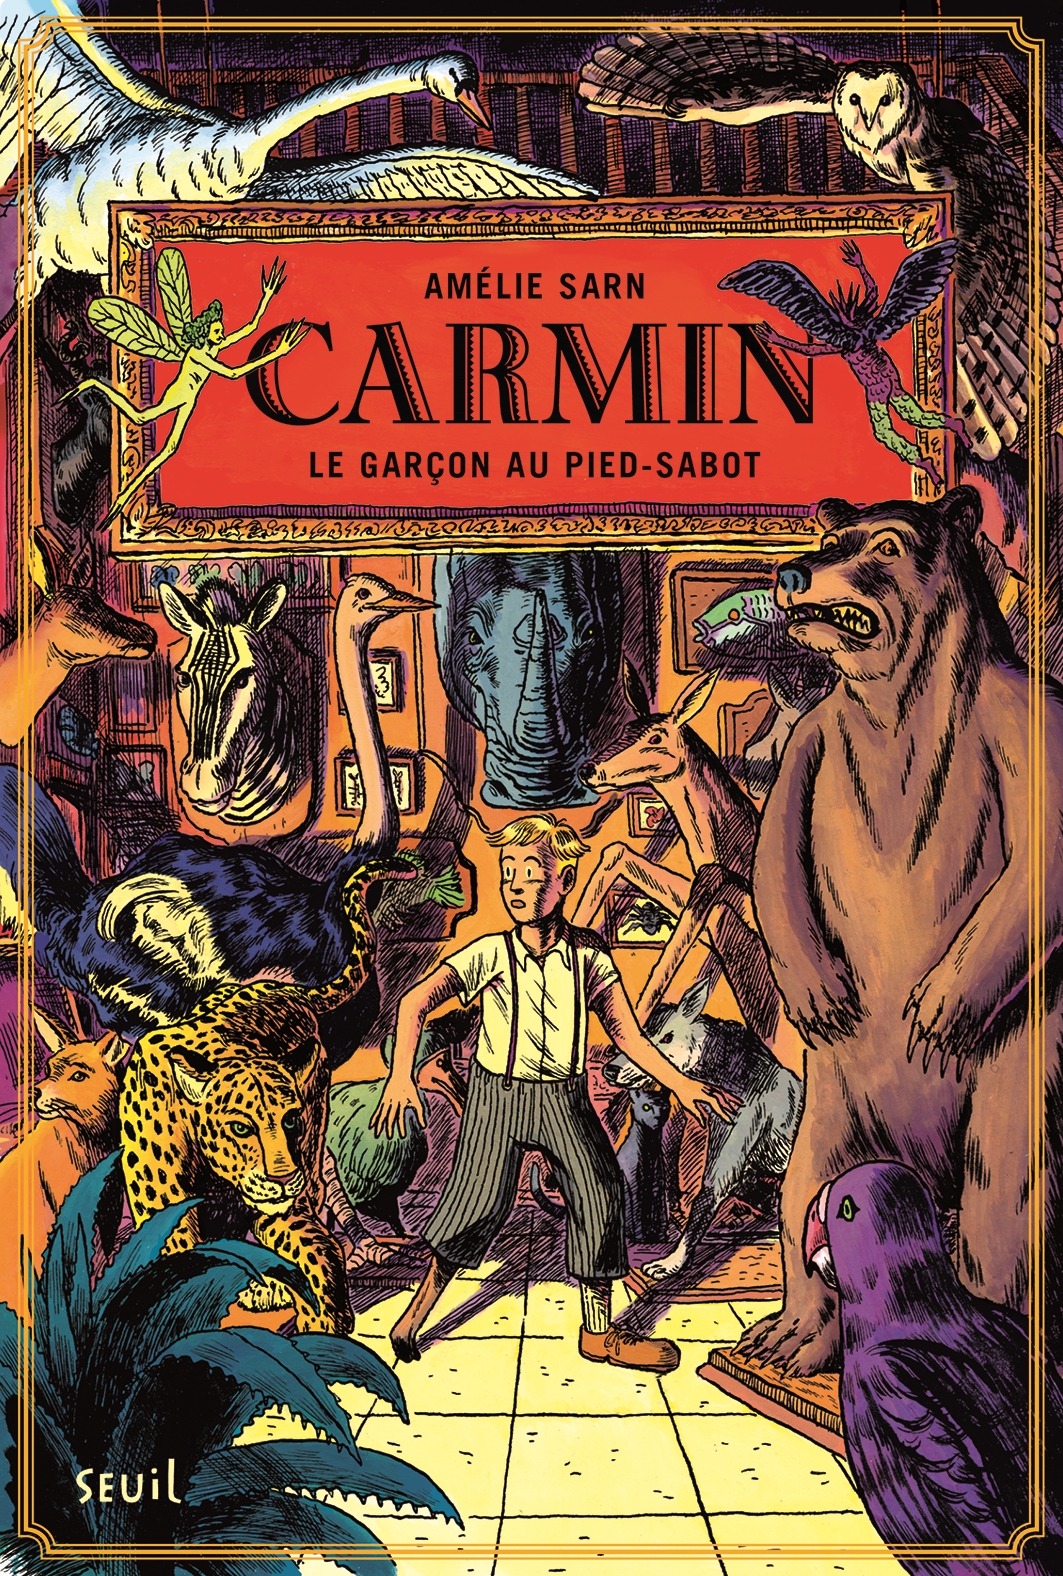 Livre Carmin, Le garçon au pied-sabot de Amélie Sarn